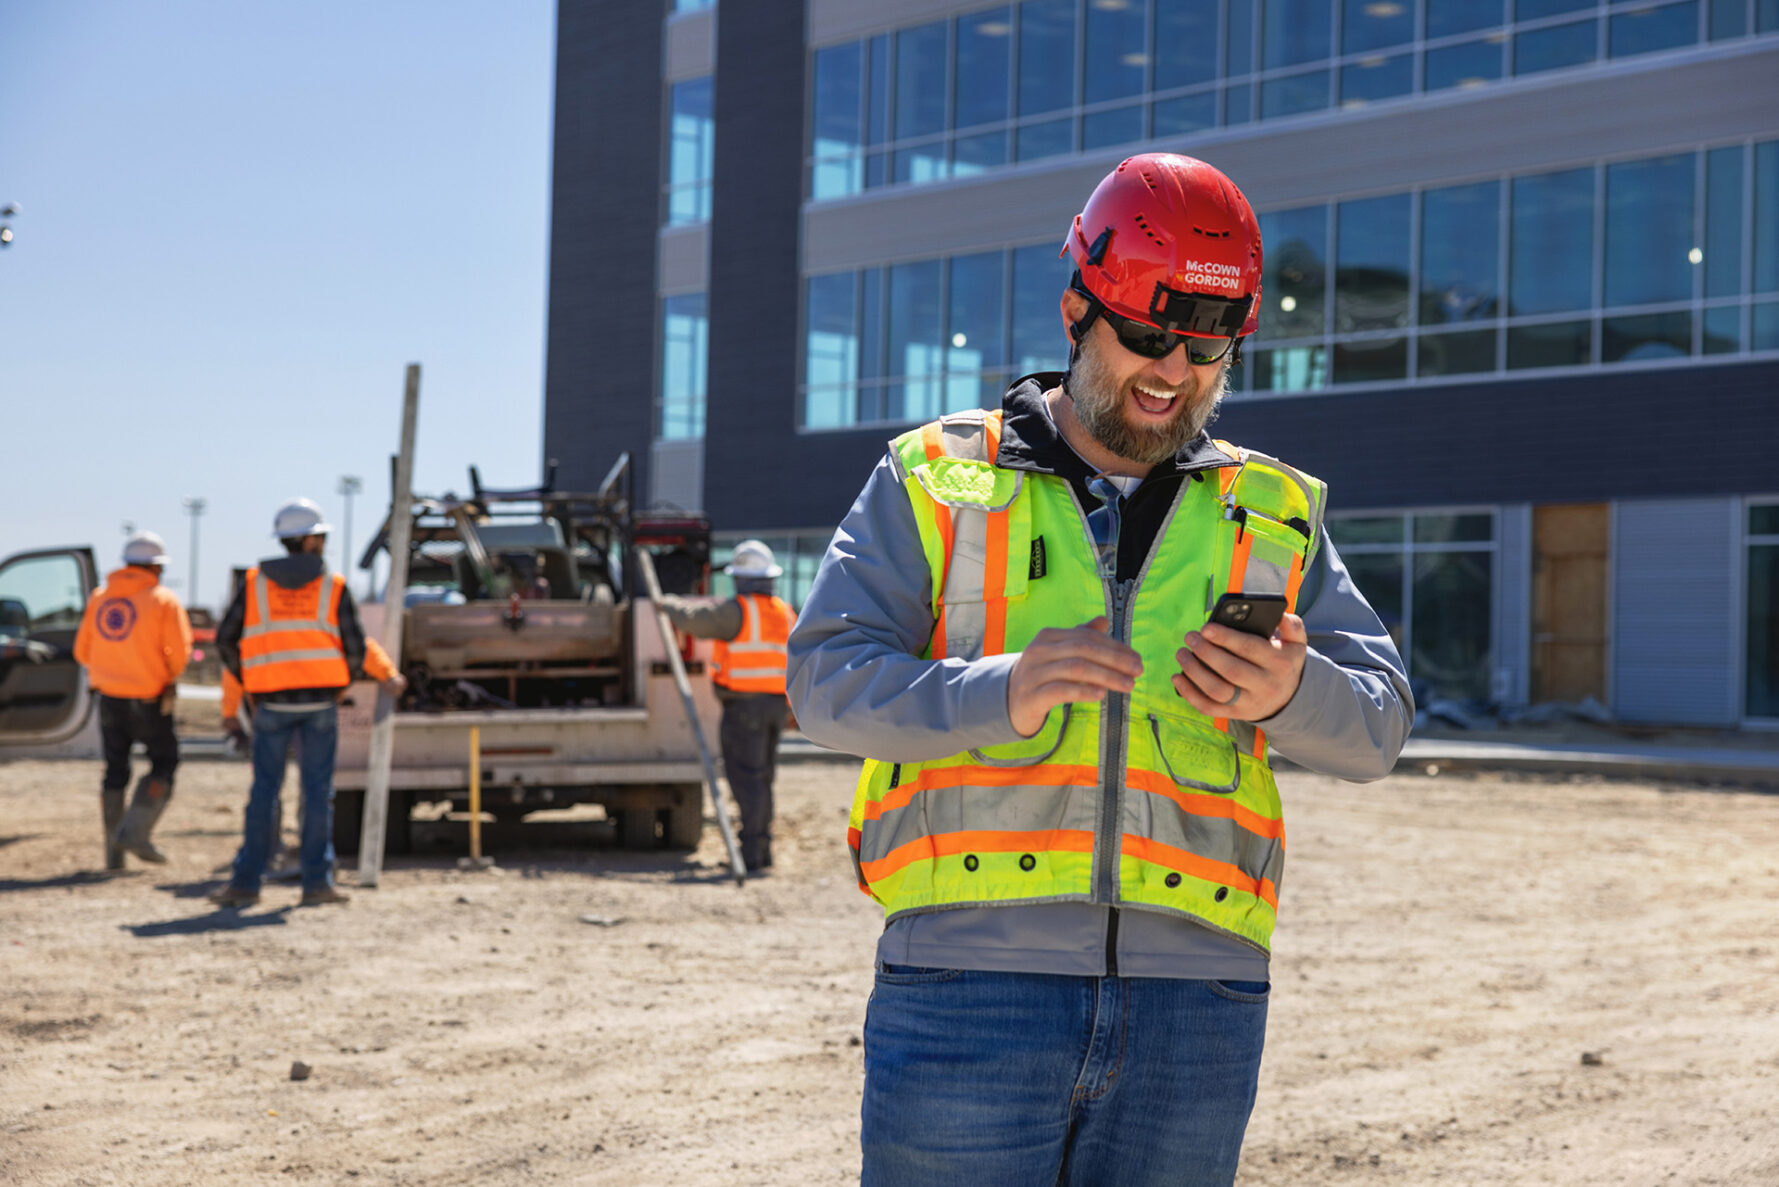 McCownGordon associate looking at phone on a construction site in Manhattan, Kansas